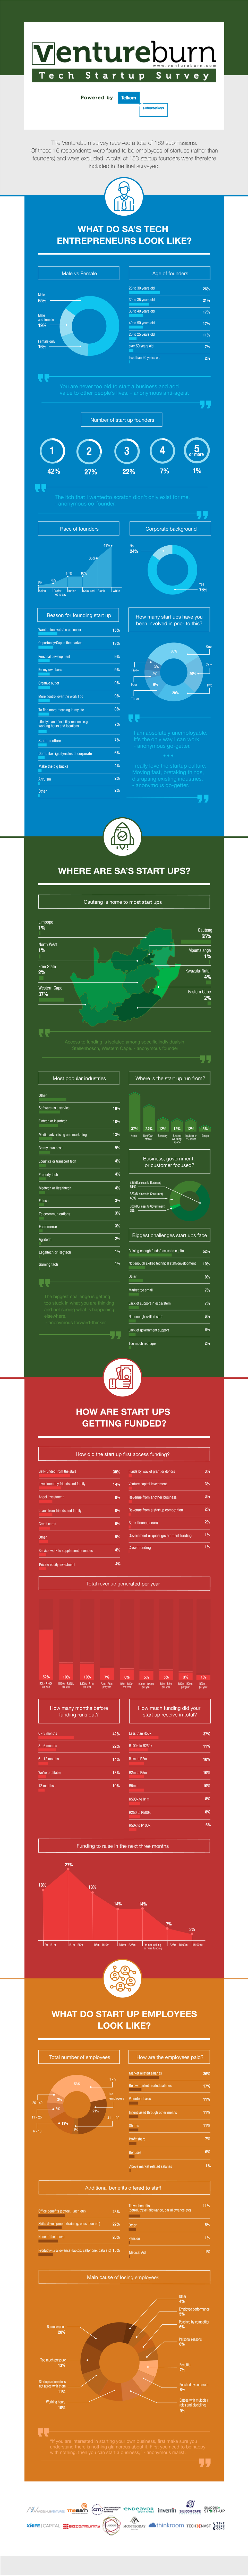 ventureburn-startup-survey-infographic-01